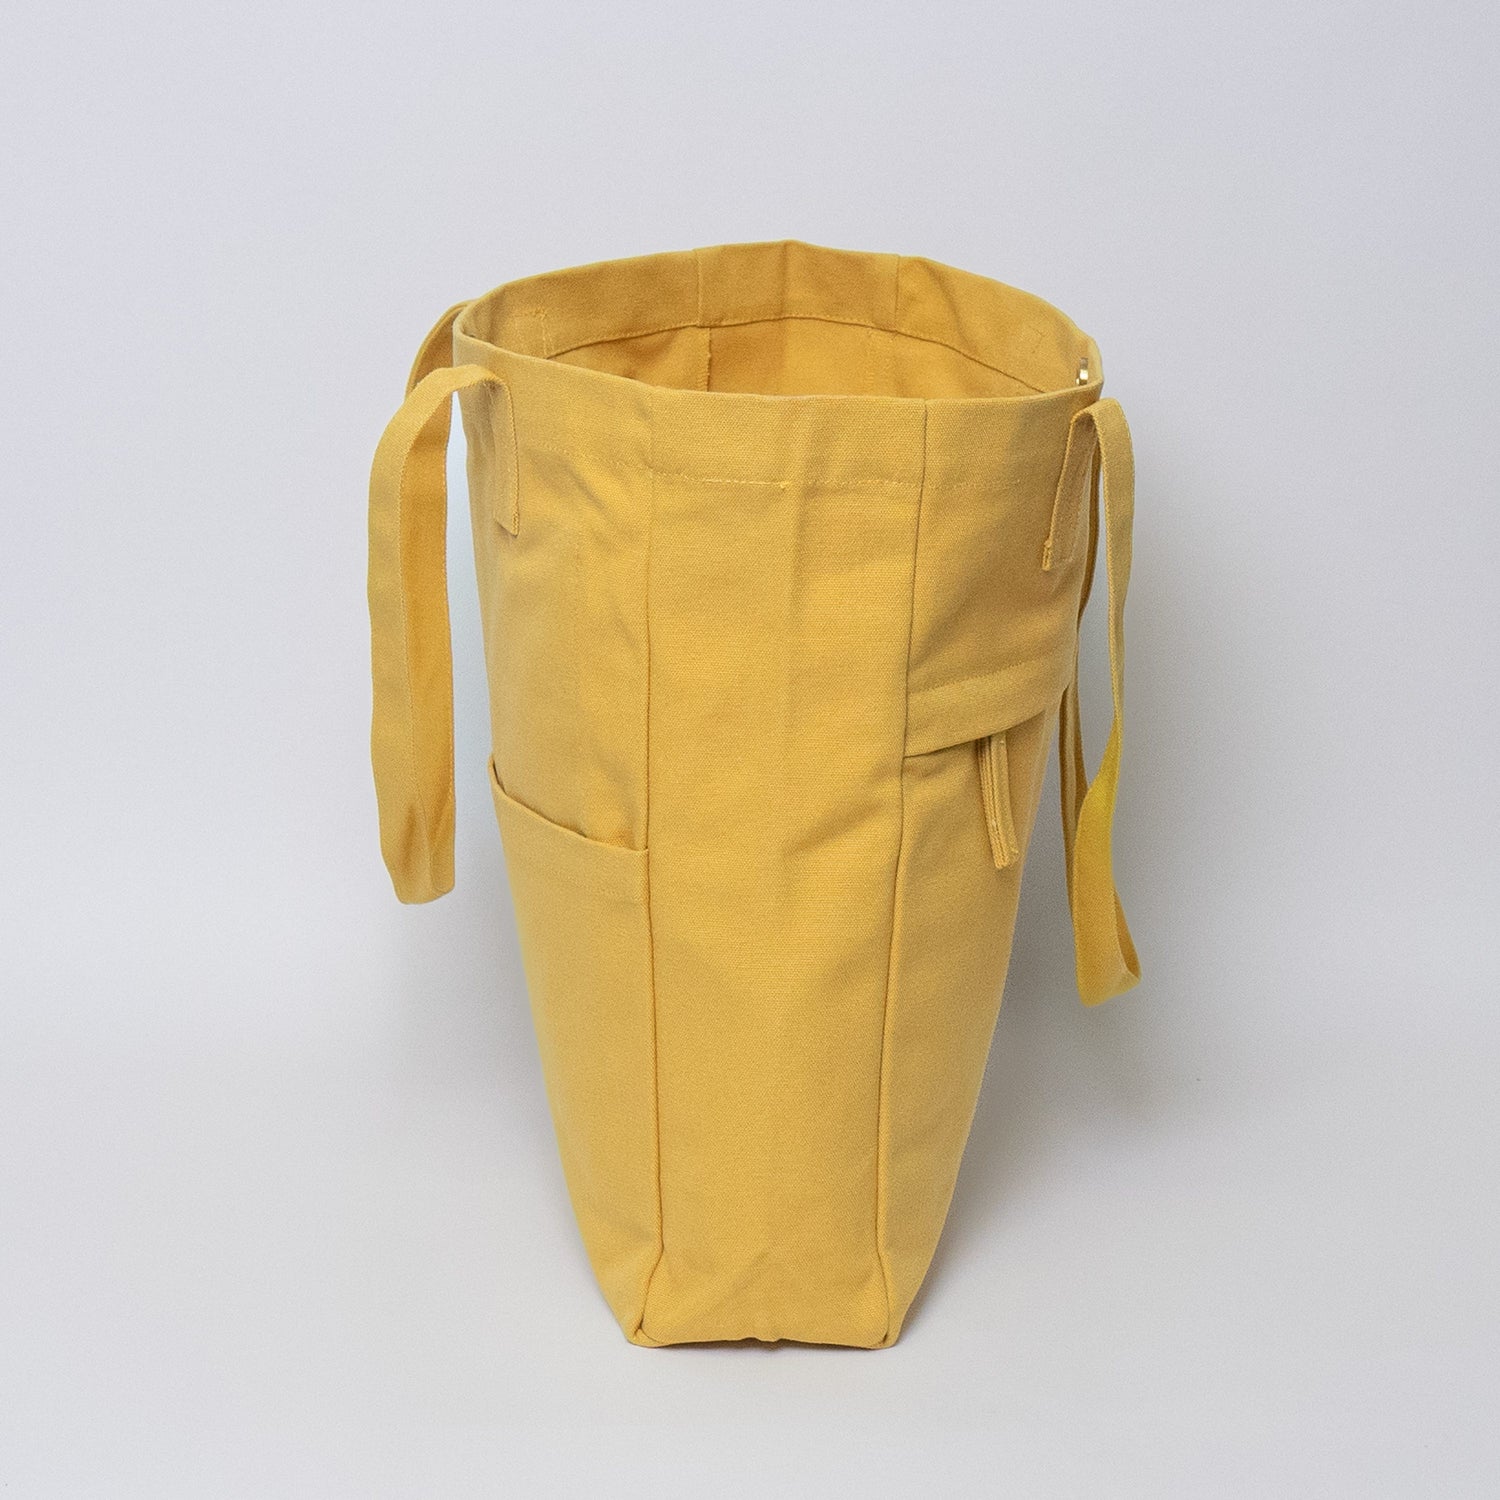 Medium Solid Color 5 Pocket Open Top Canvas Tote Bag